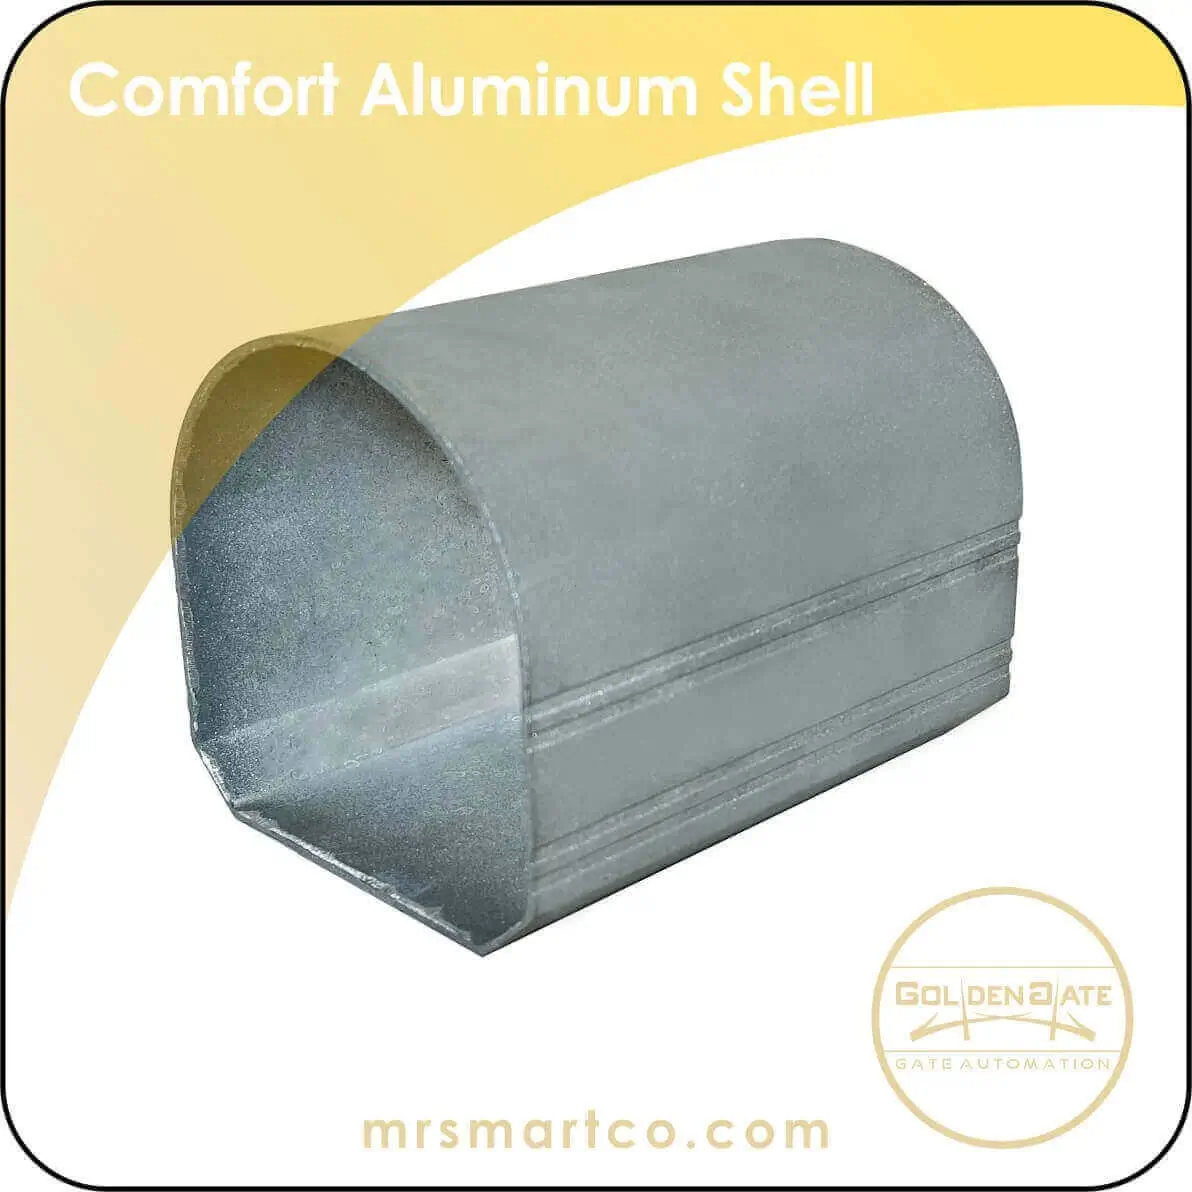 Comfort aluminum shell